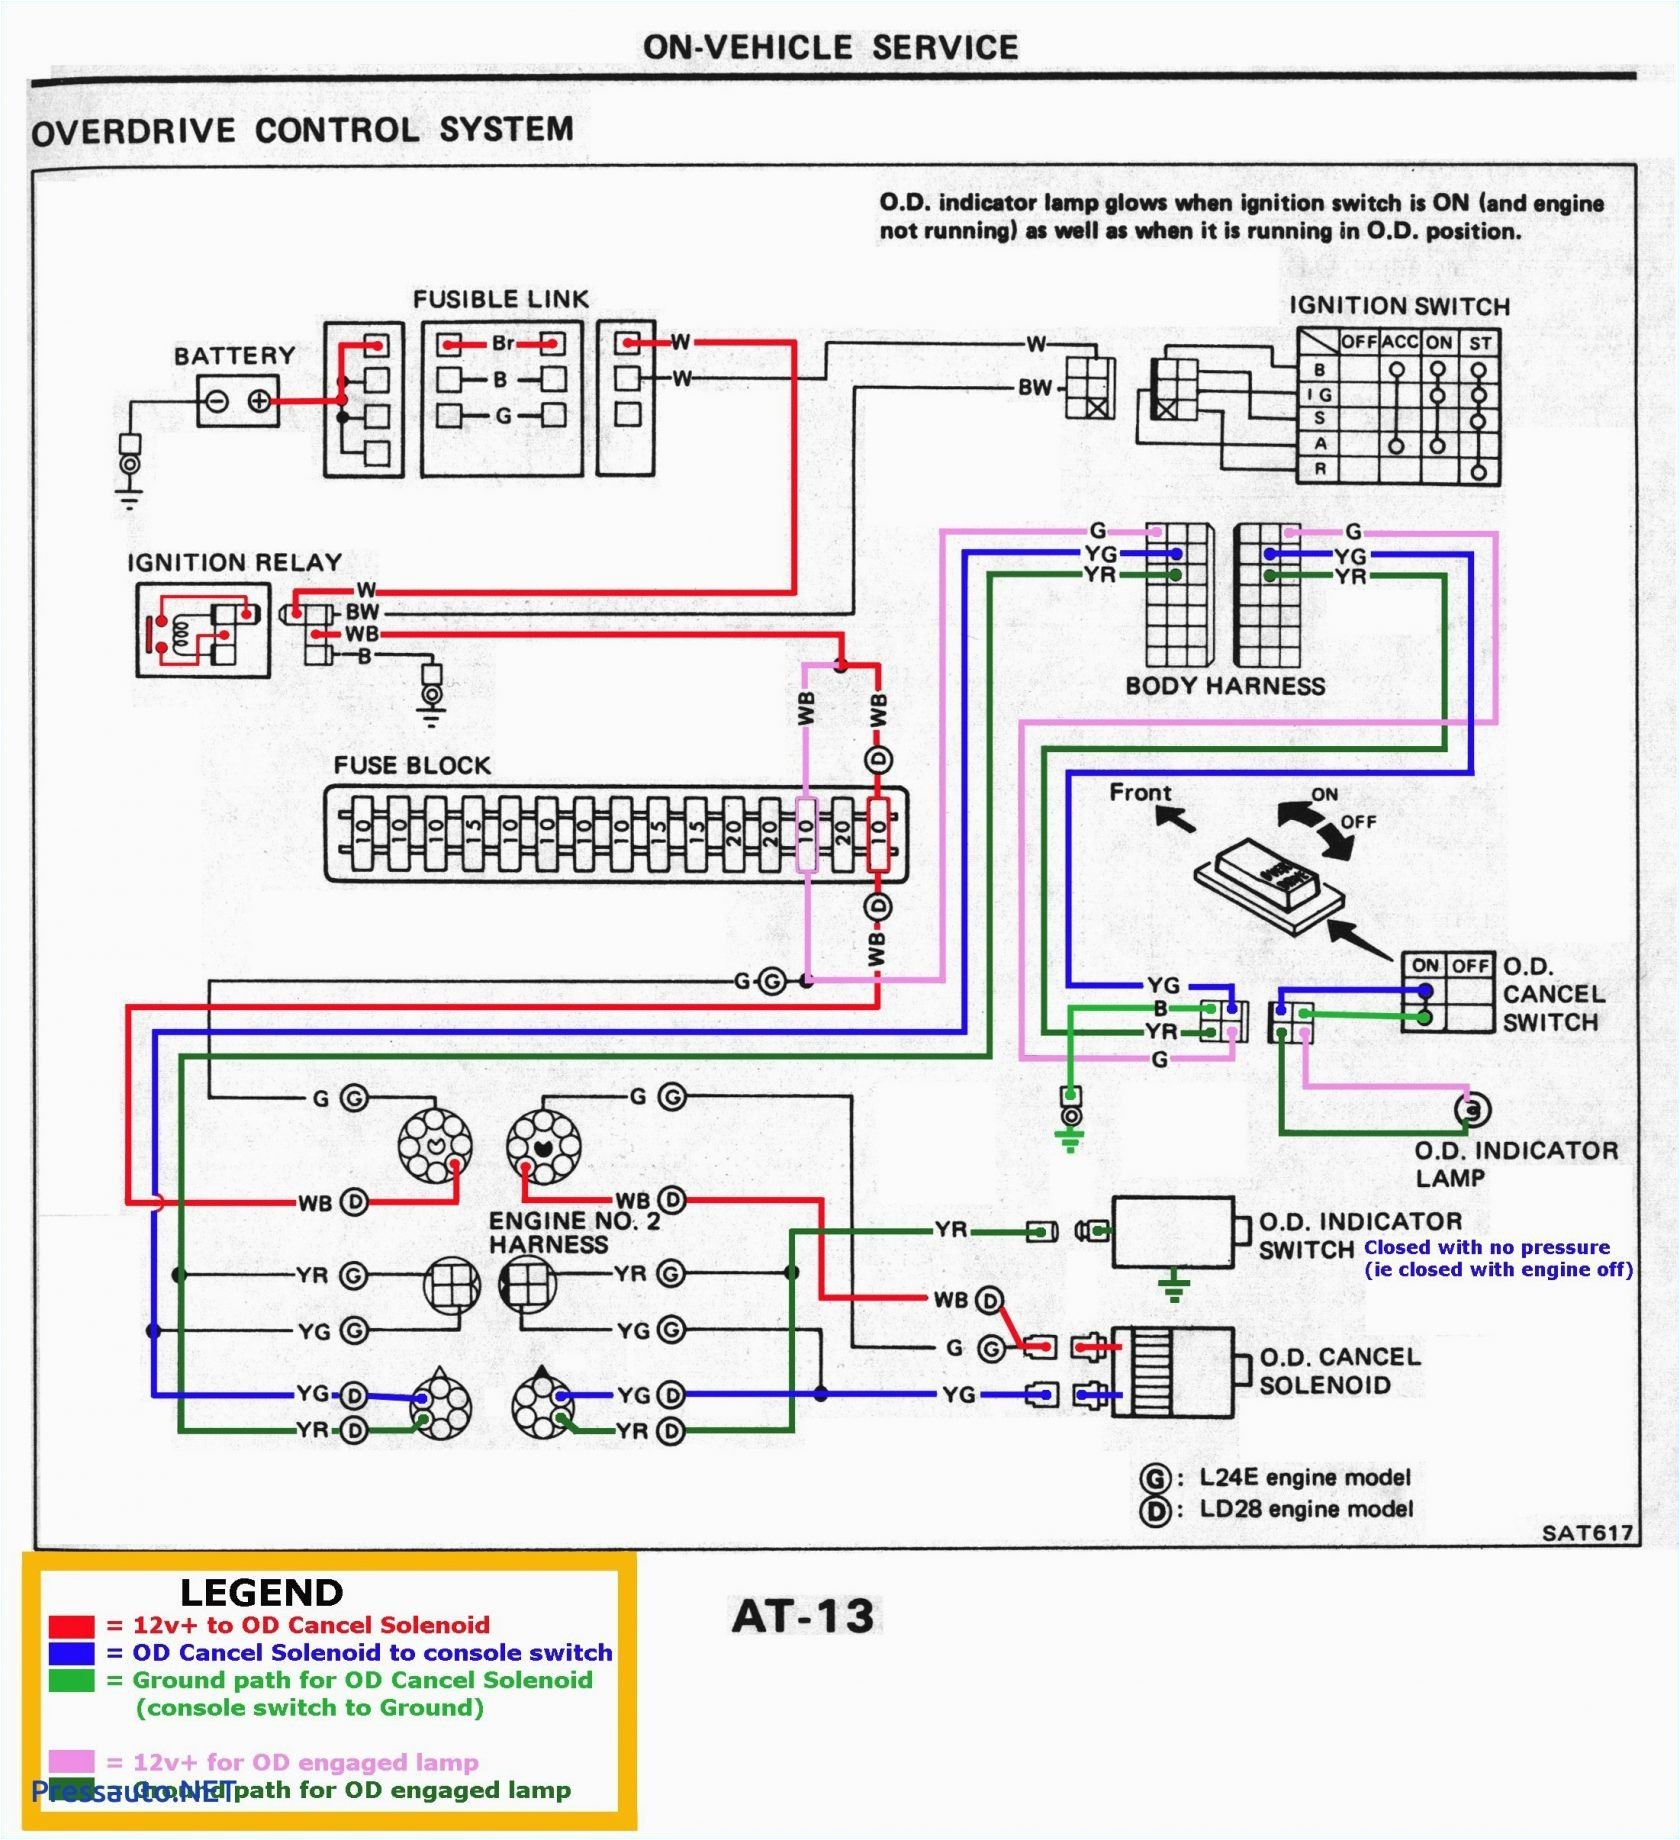 toyota engine diagram p062dno1 wiring diagrams global toyota engine diagram p062dno1 wiring diagram blog toyota engine